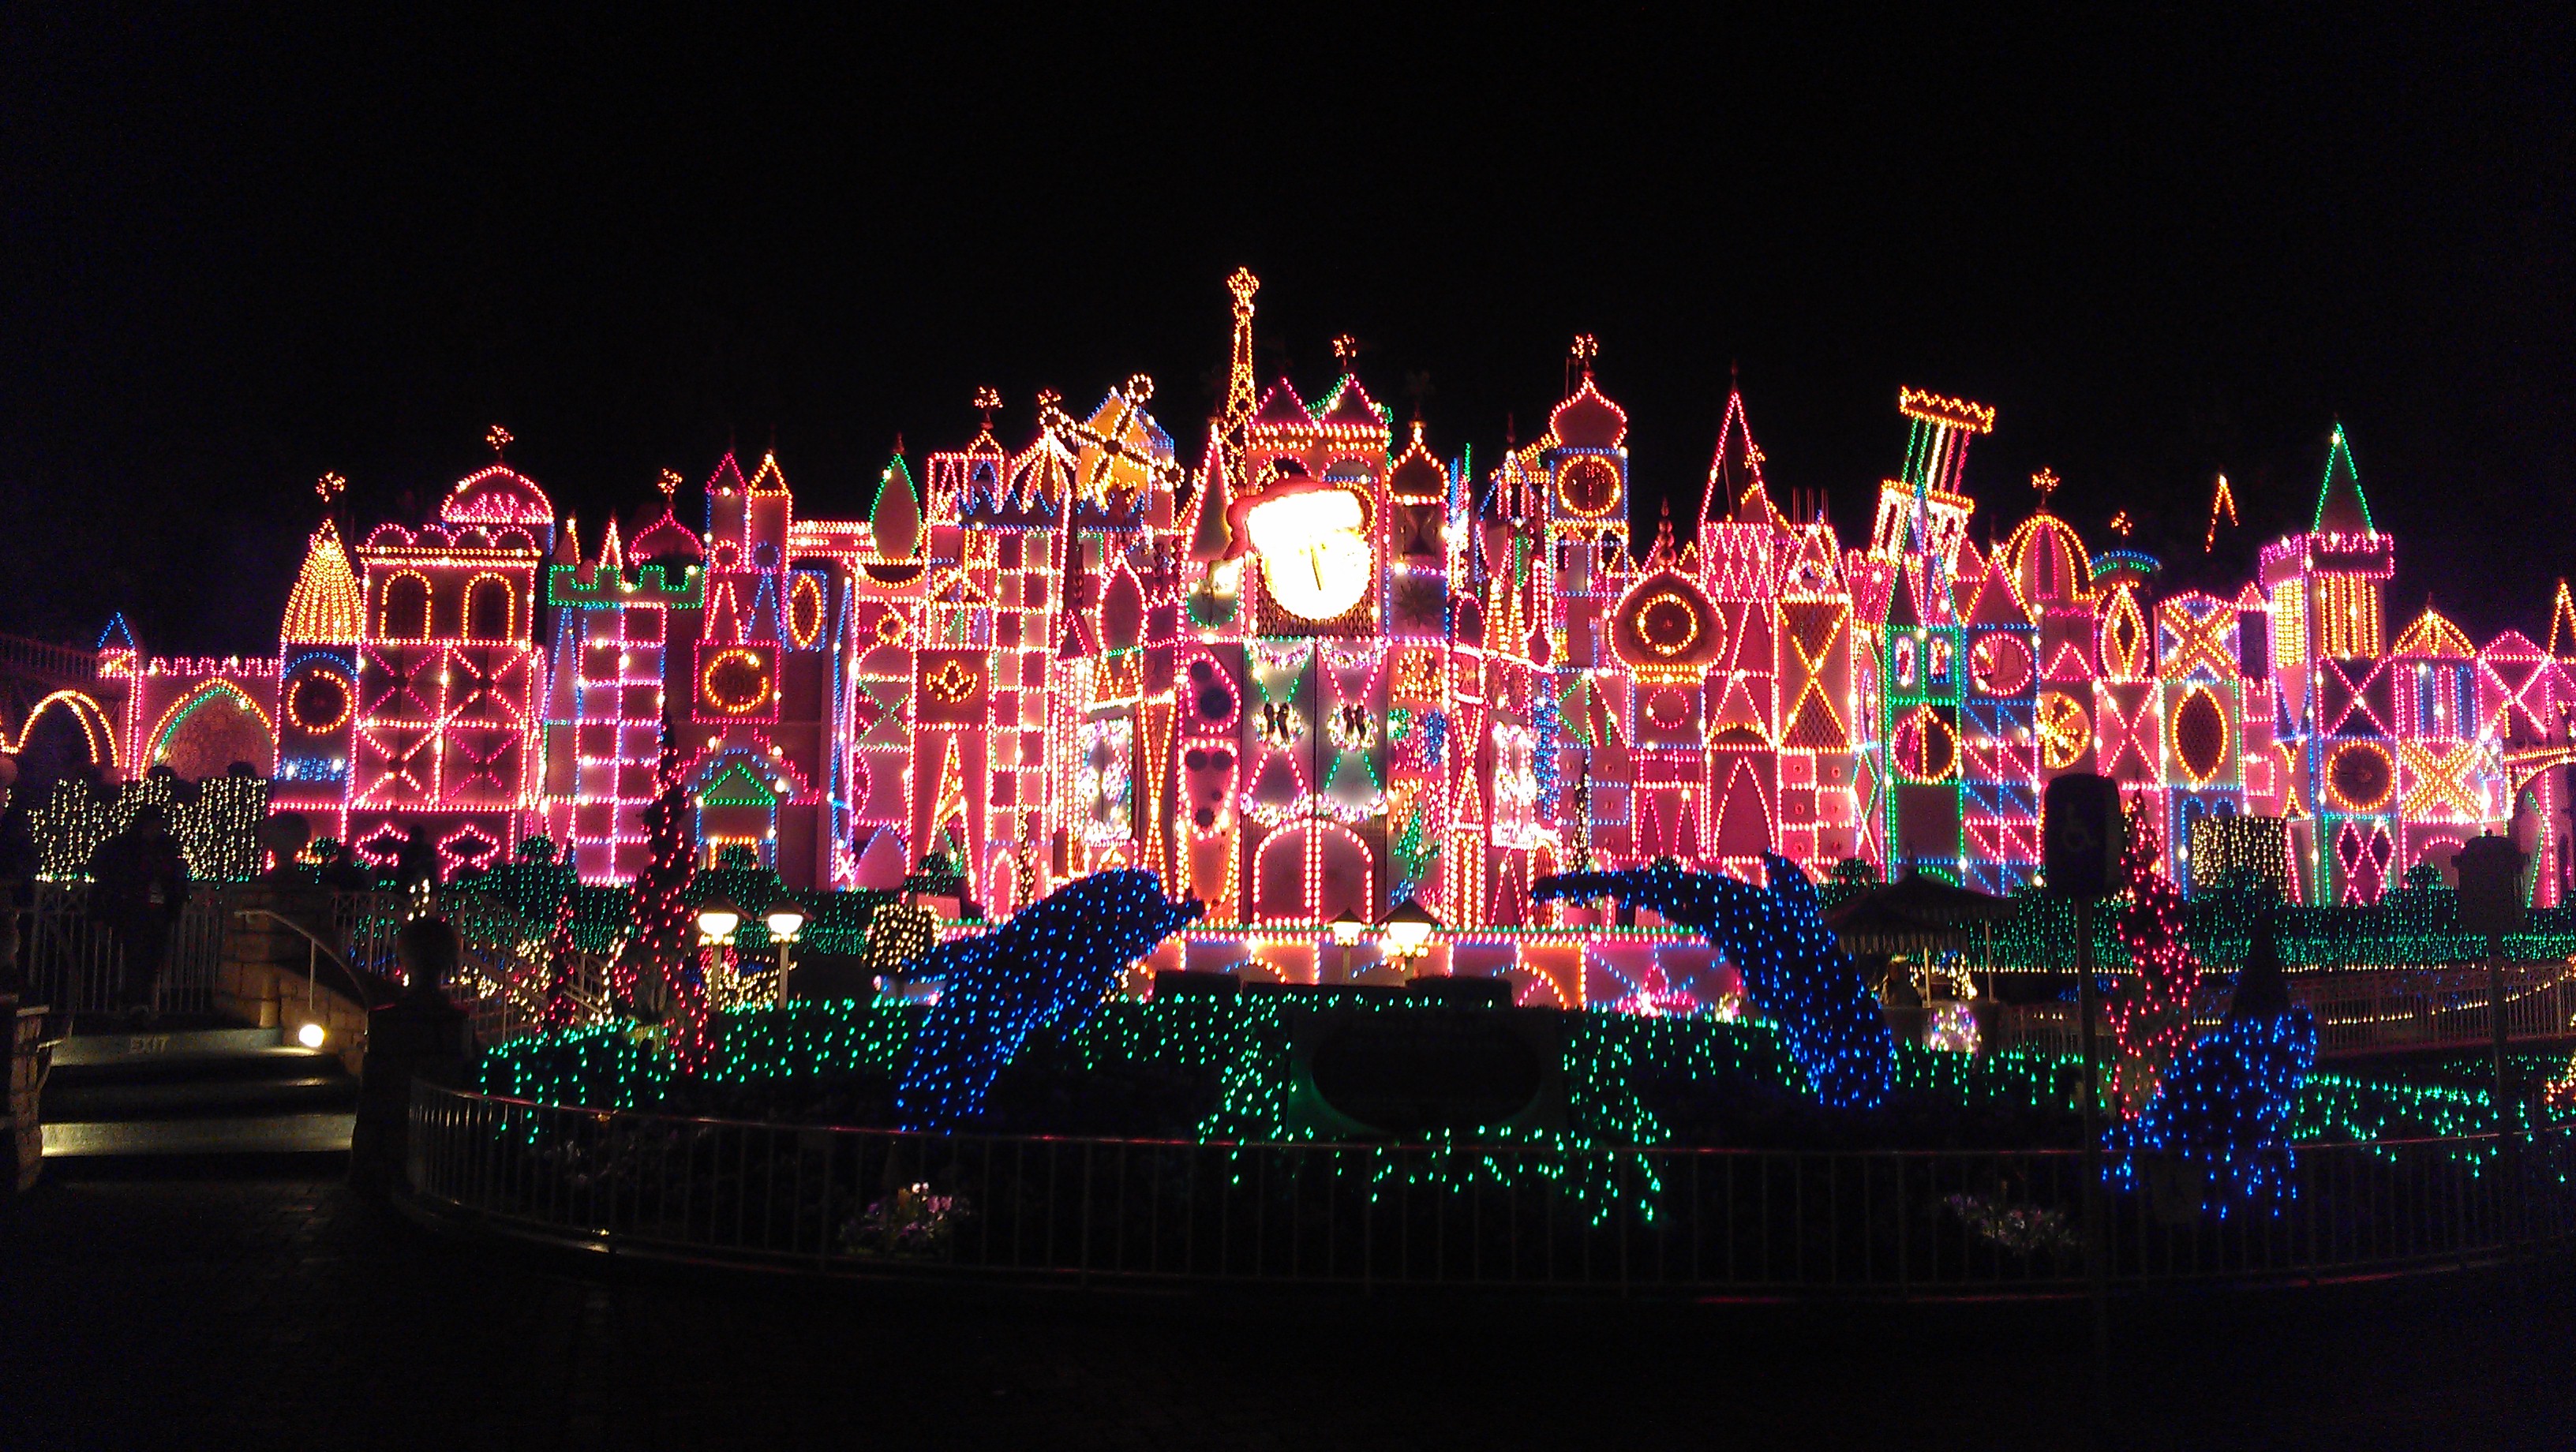 It's Christmas time at Disneyland! | Gaskins Moving Forward